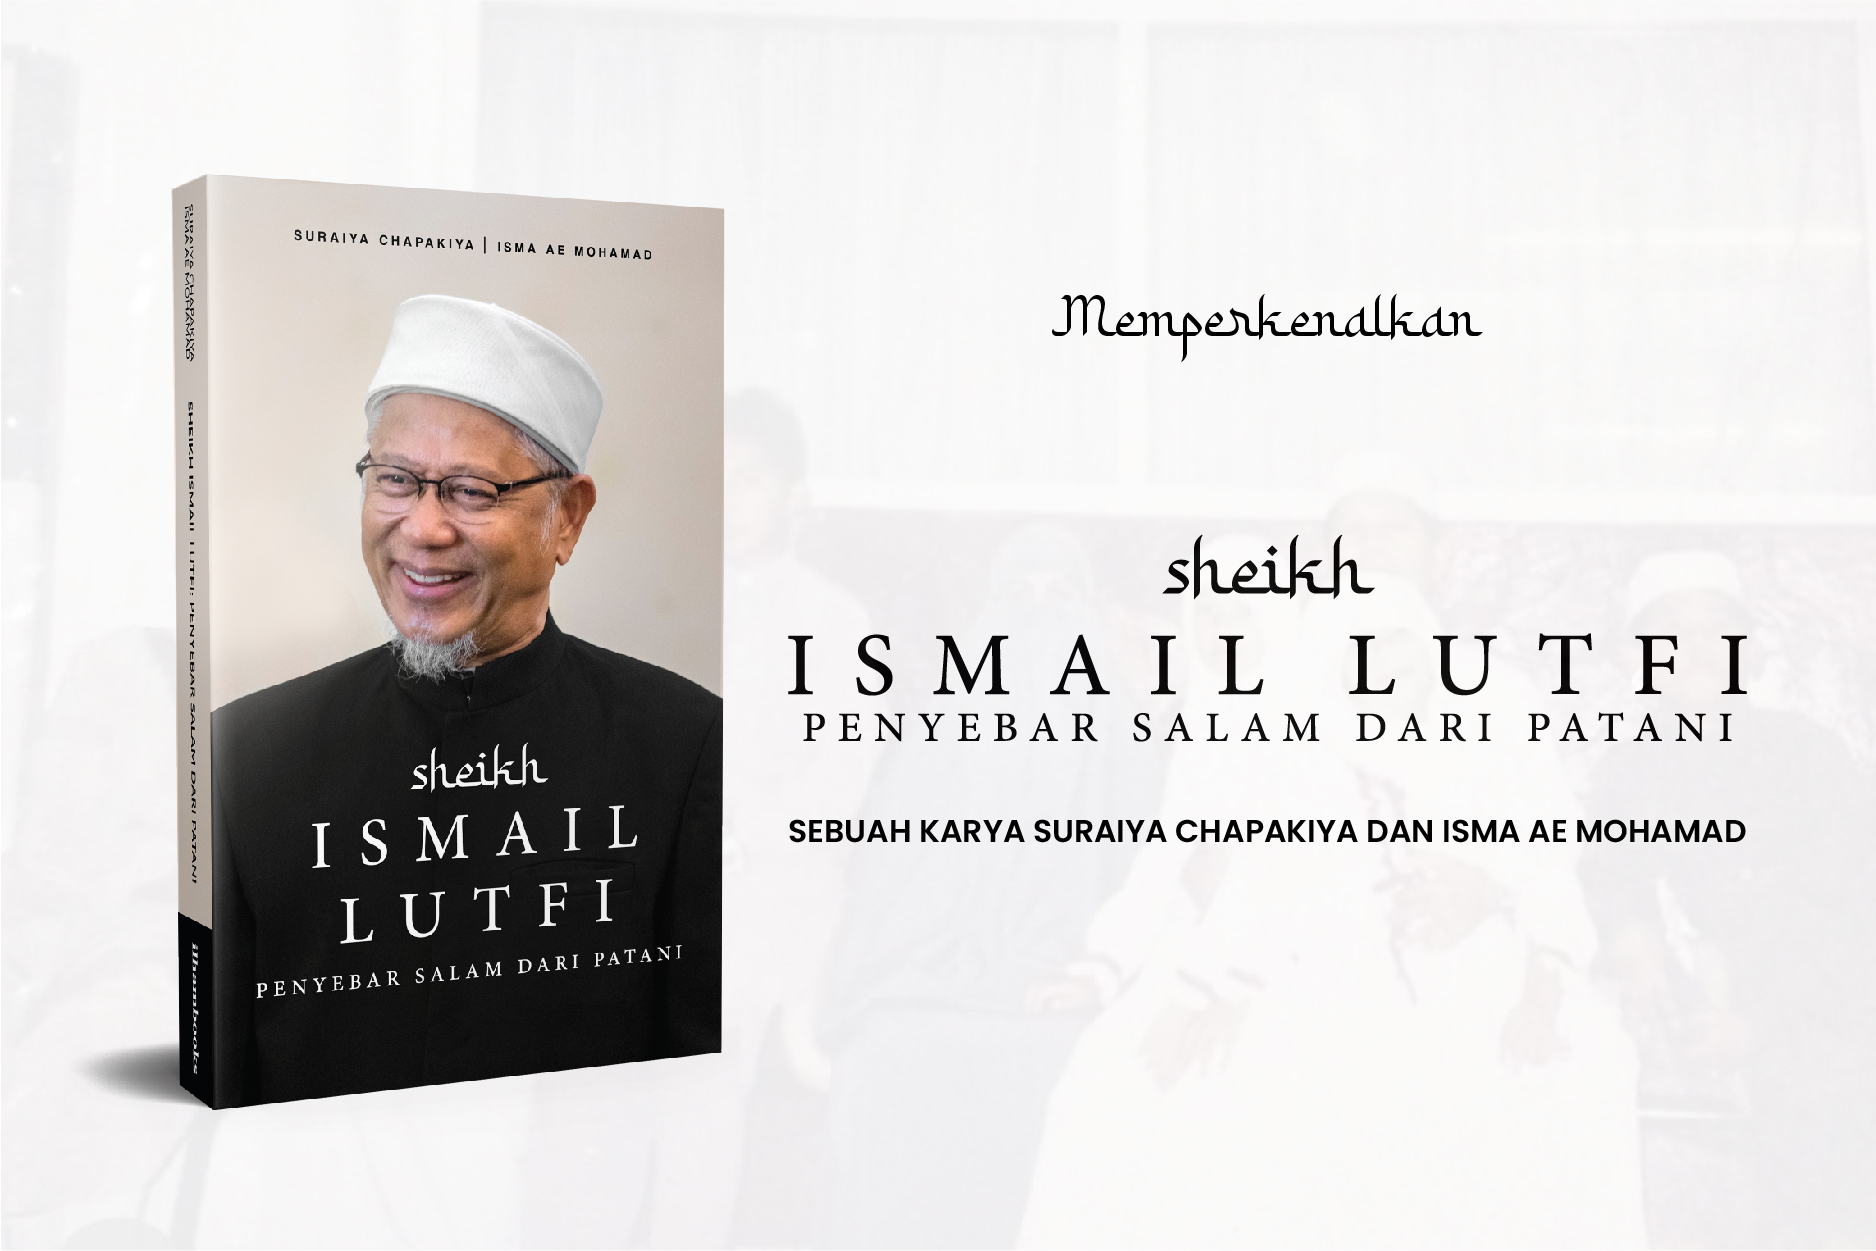 Sheikh Ismail Lutfi: Penyebar Salam Dari Patani